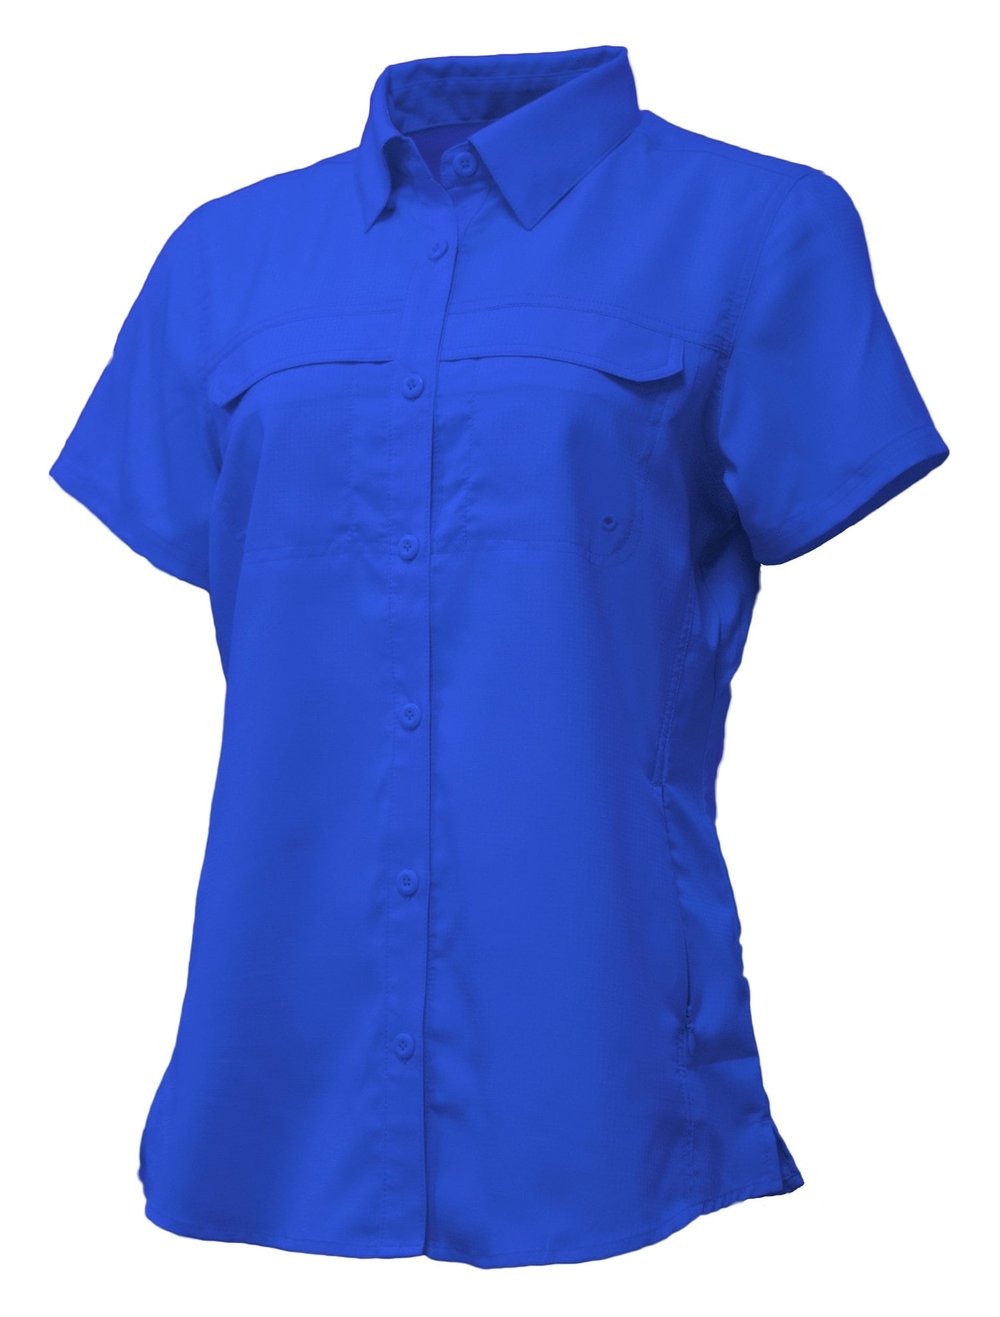 Fishing Shirt, Ladies Shirt, Embroidery, Blank Shirt, Short Sleeve Fishing Shirt, Shirt for Her